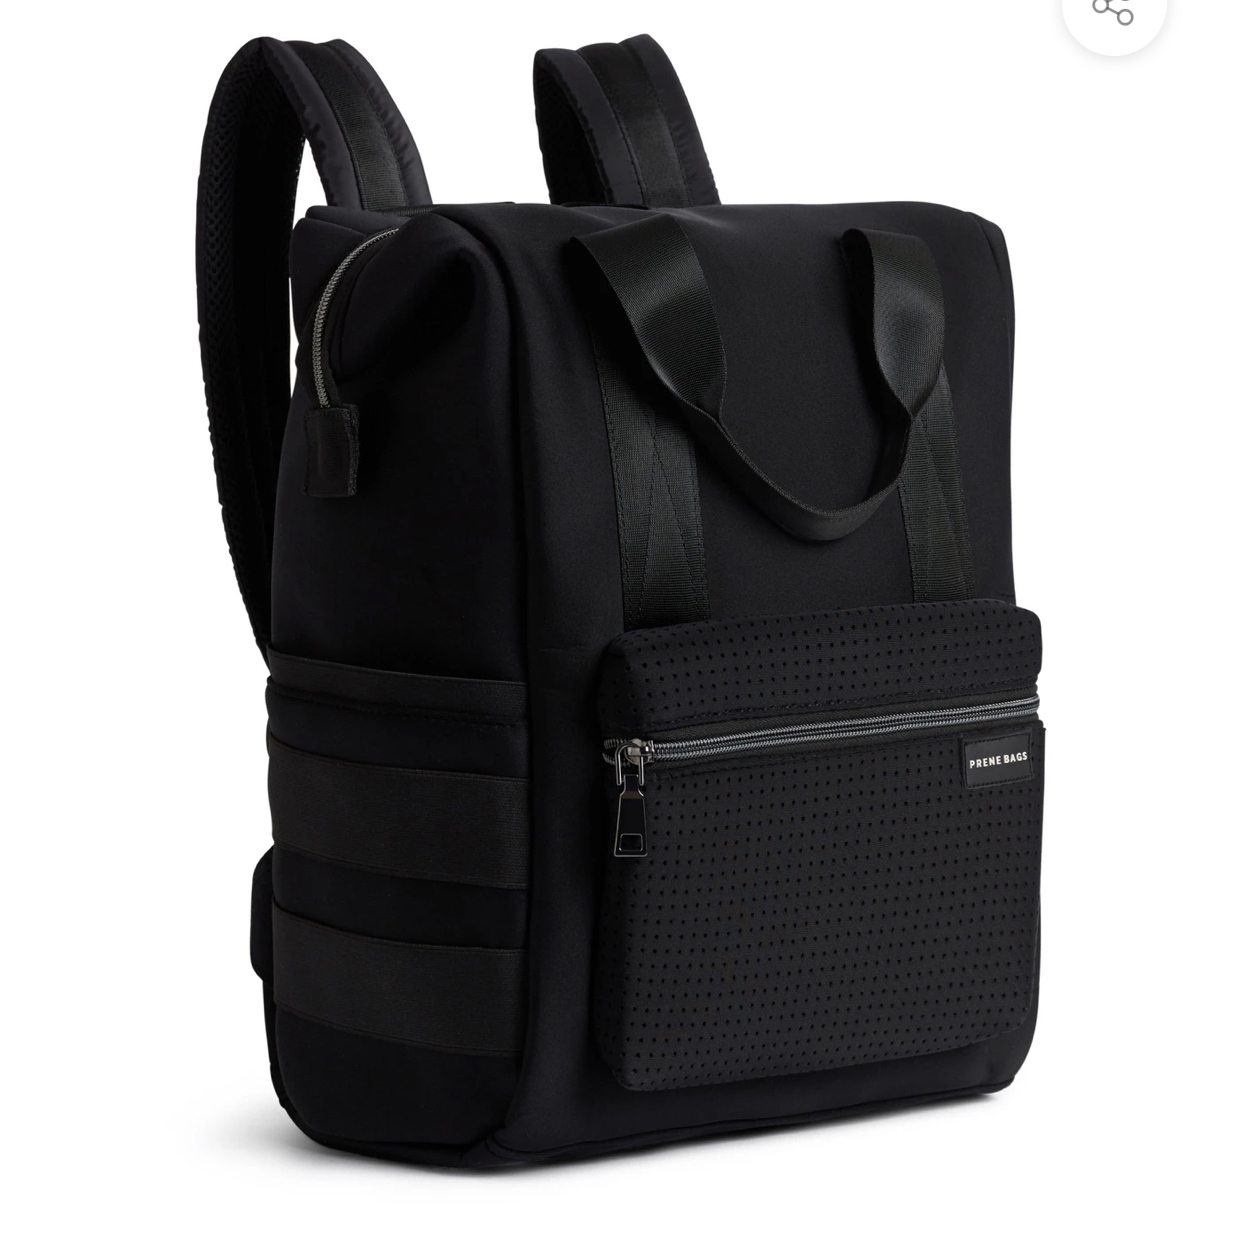 Prene Bags  The Haven Backpack (BLACK)